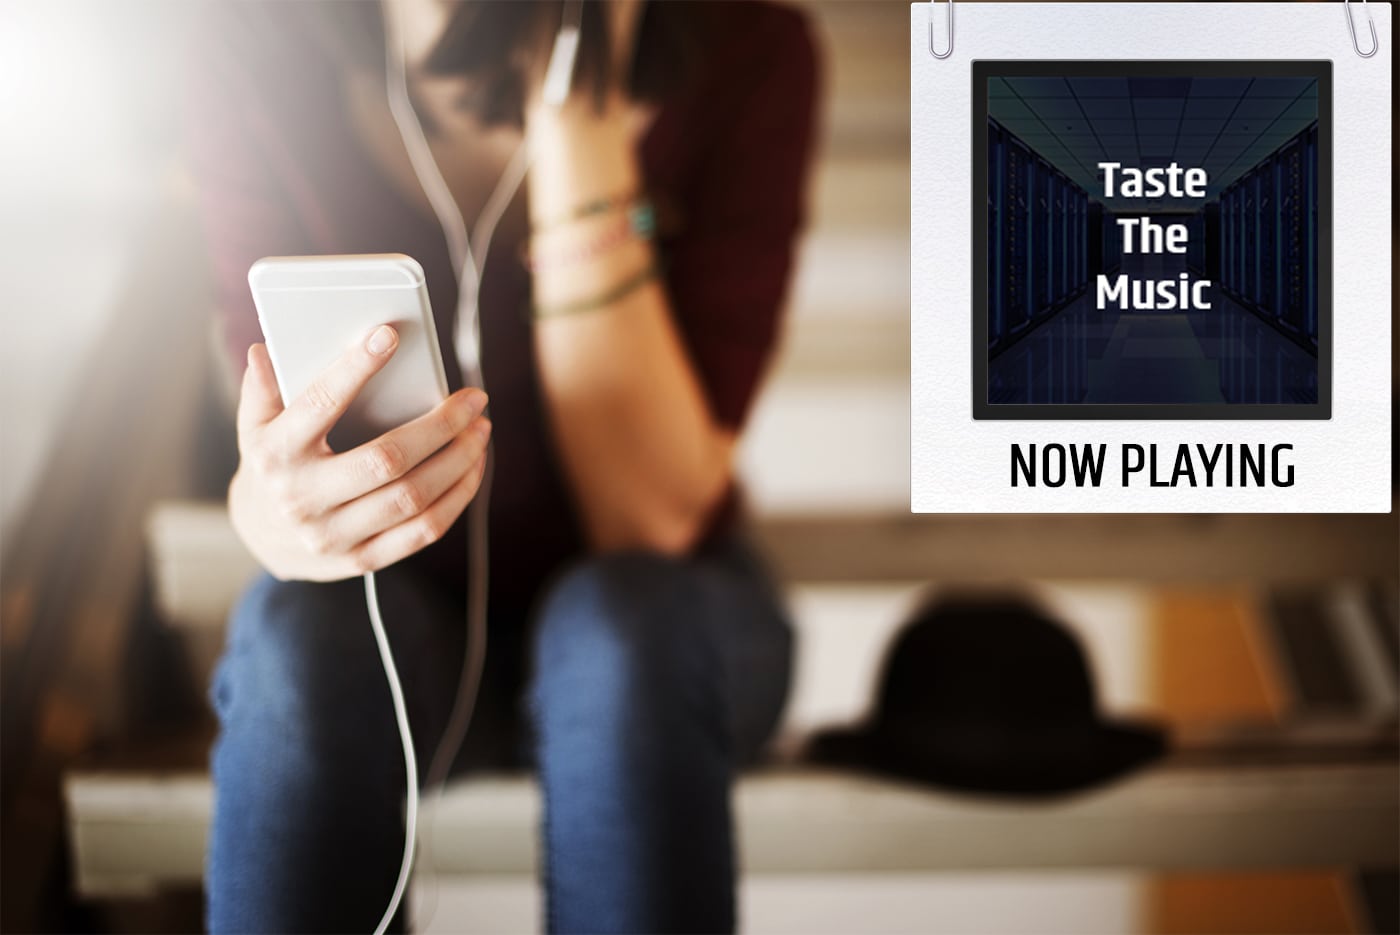 "taste the music"